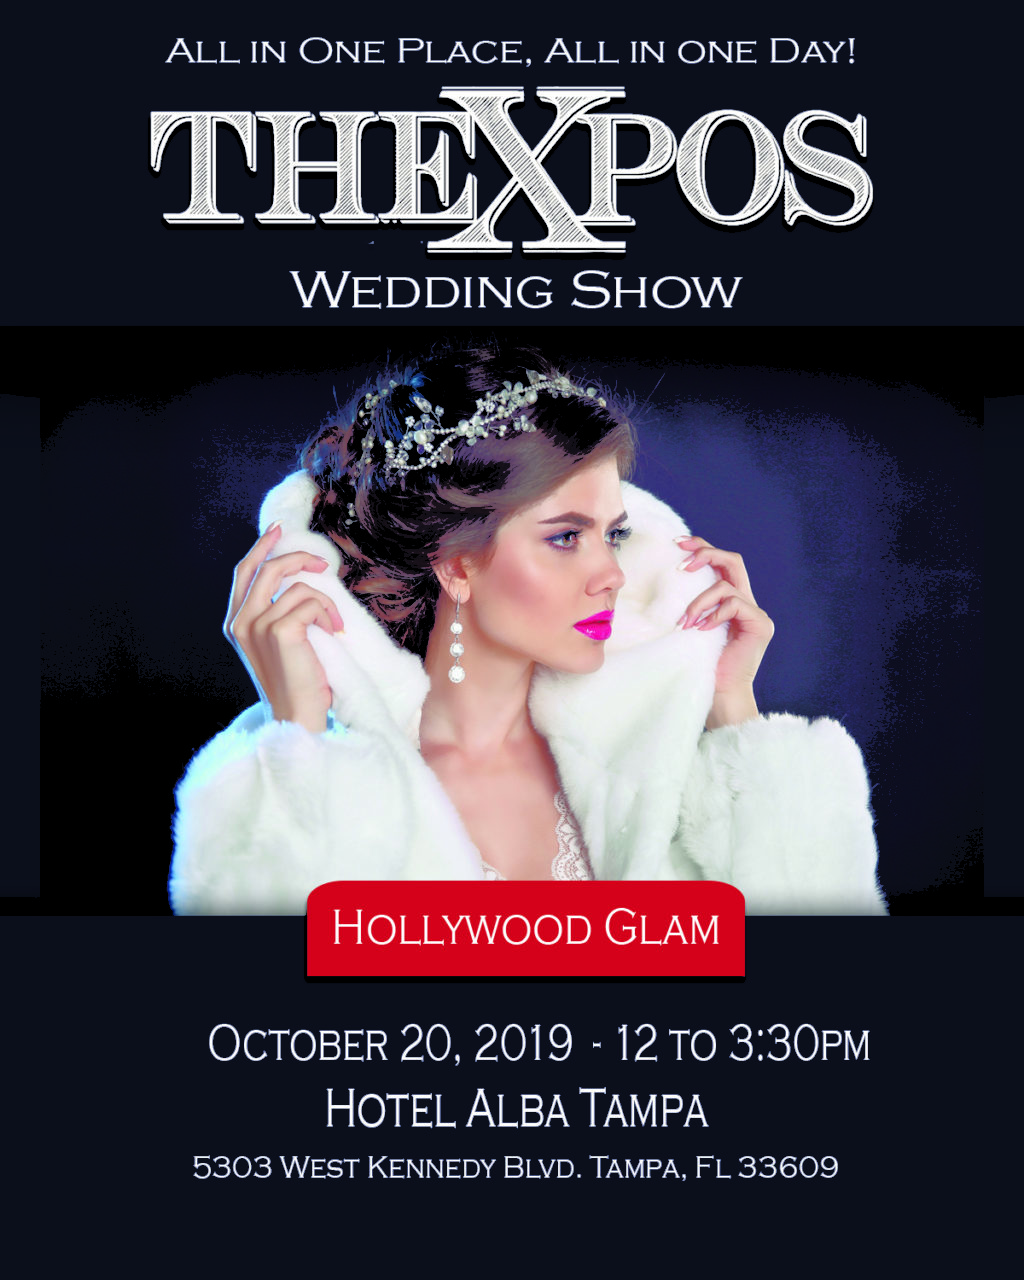 TheXpos Wedding Show Flyer | Sunday, October 20, 2019